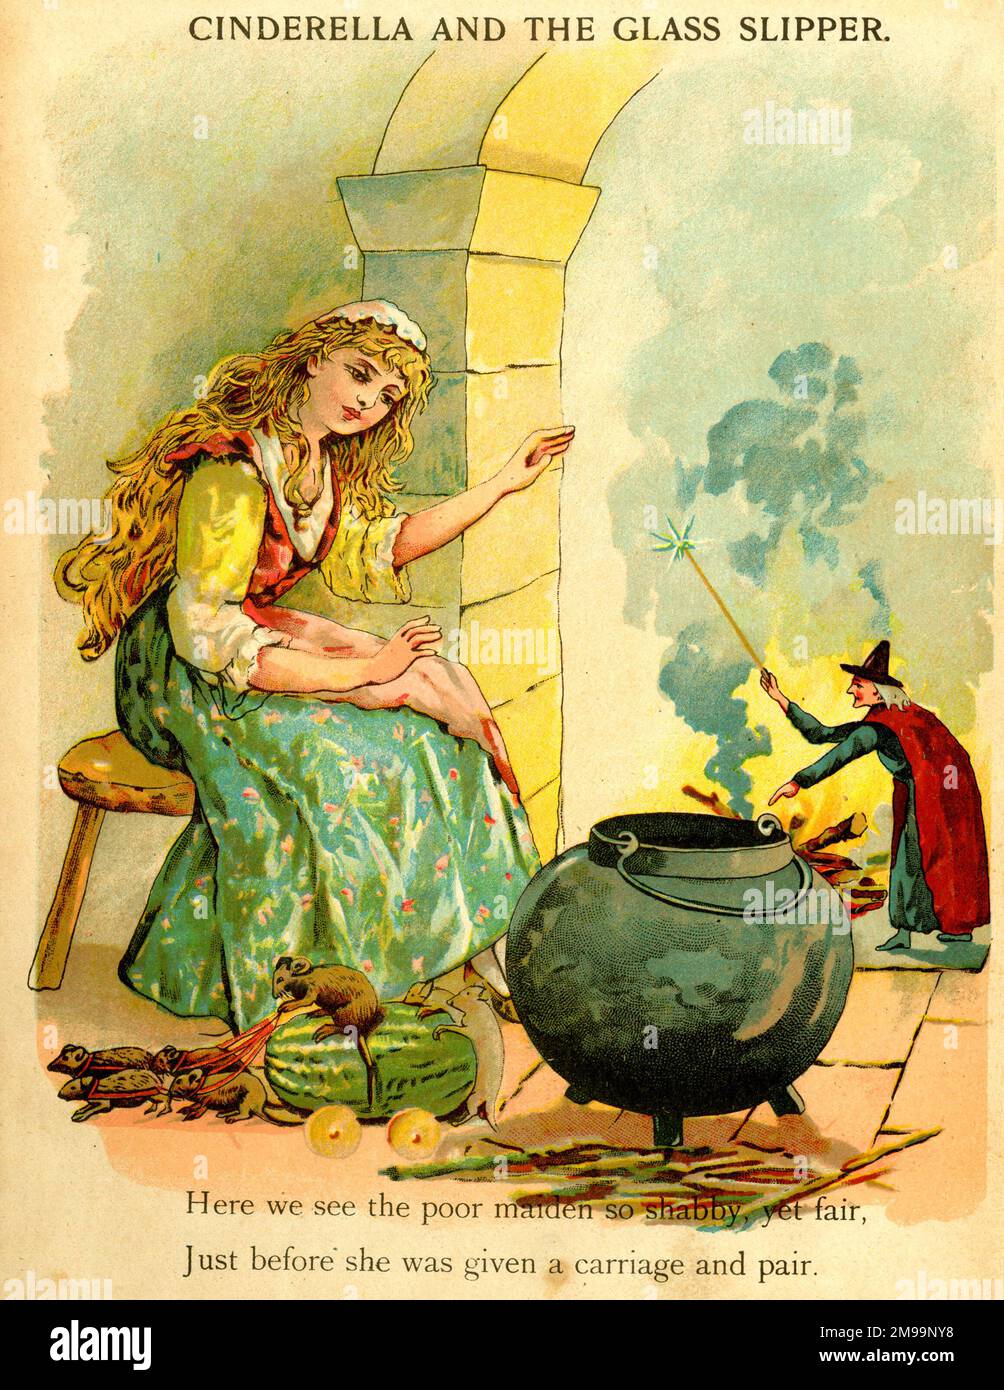 Cinderella and the Glass Slipper. Stock Photo